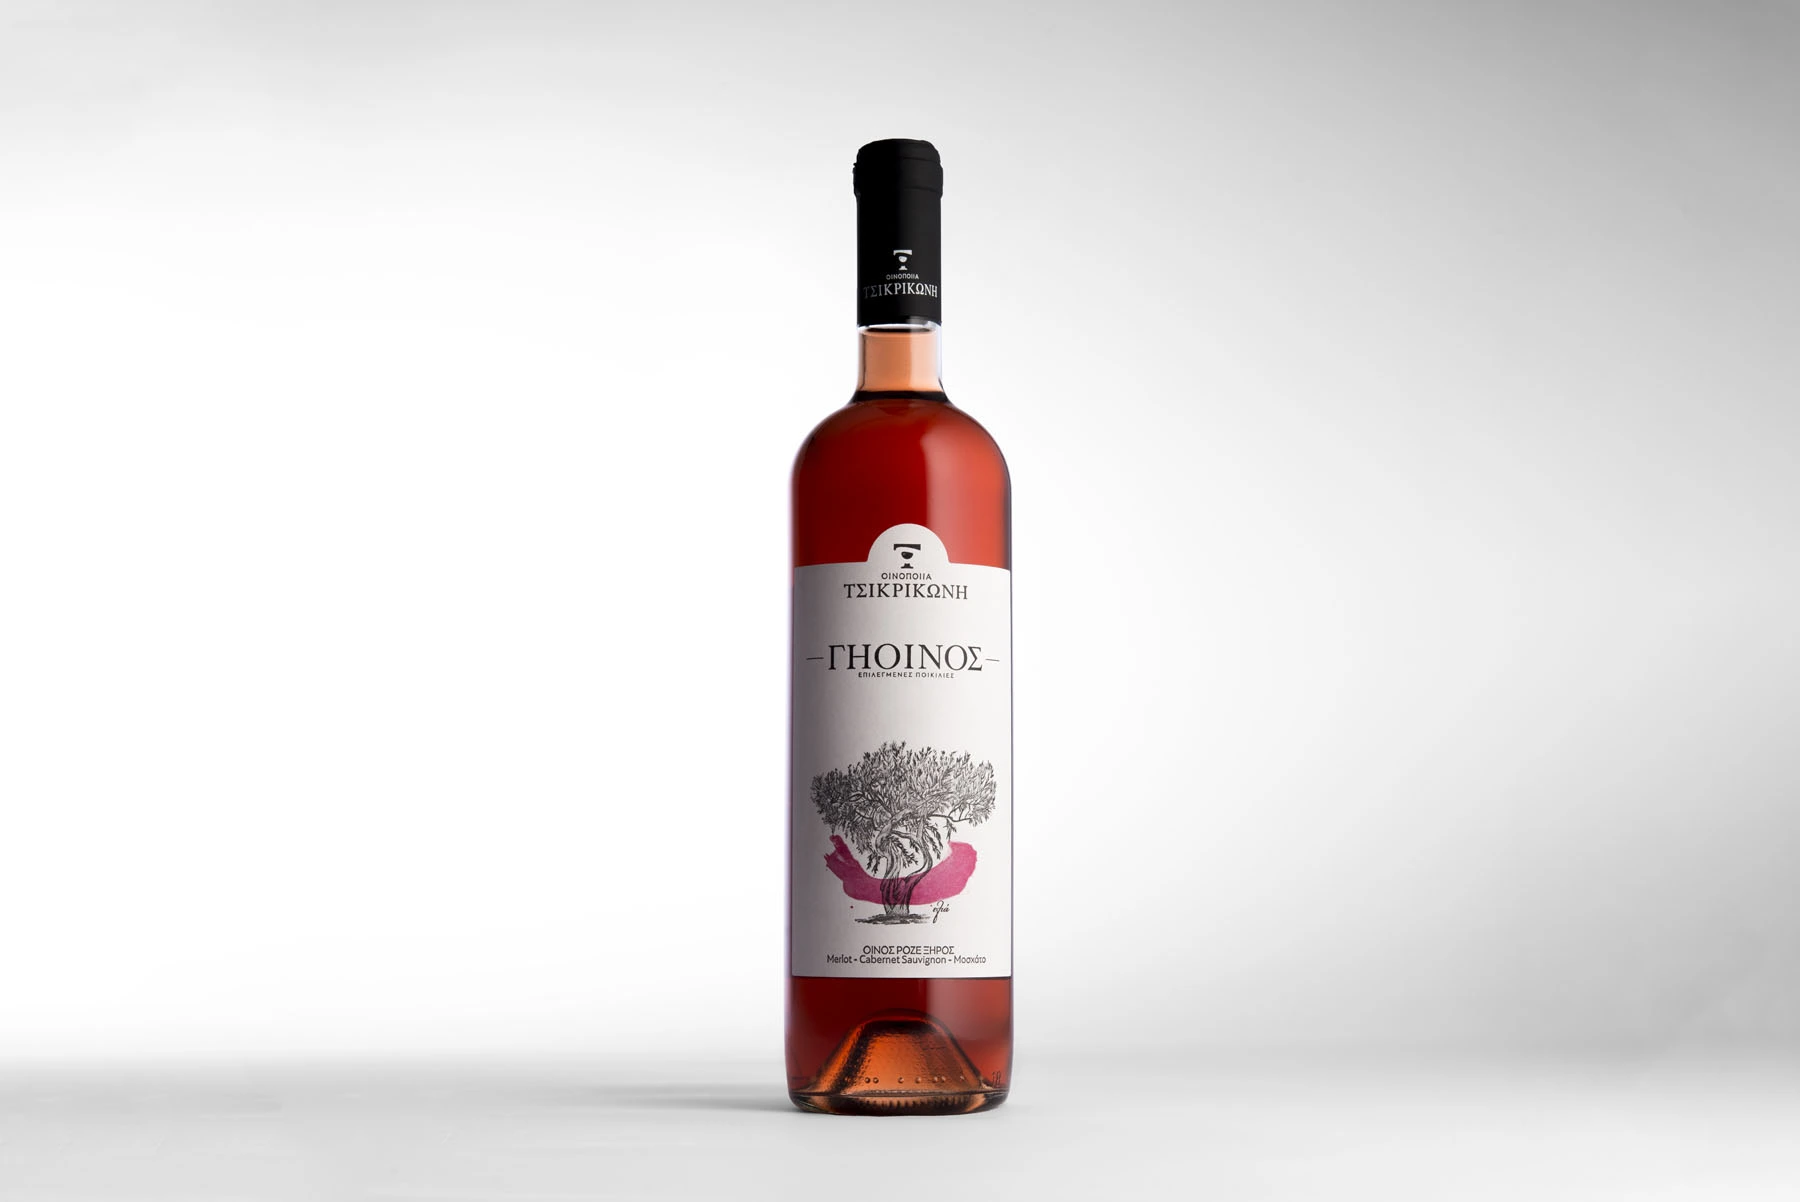 wine-label-design-gioiinos-tsikrikonis